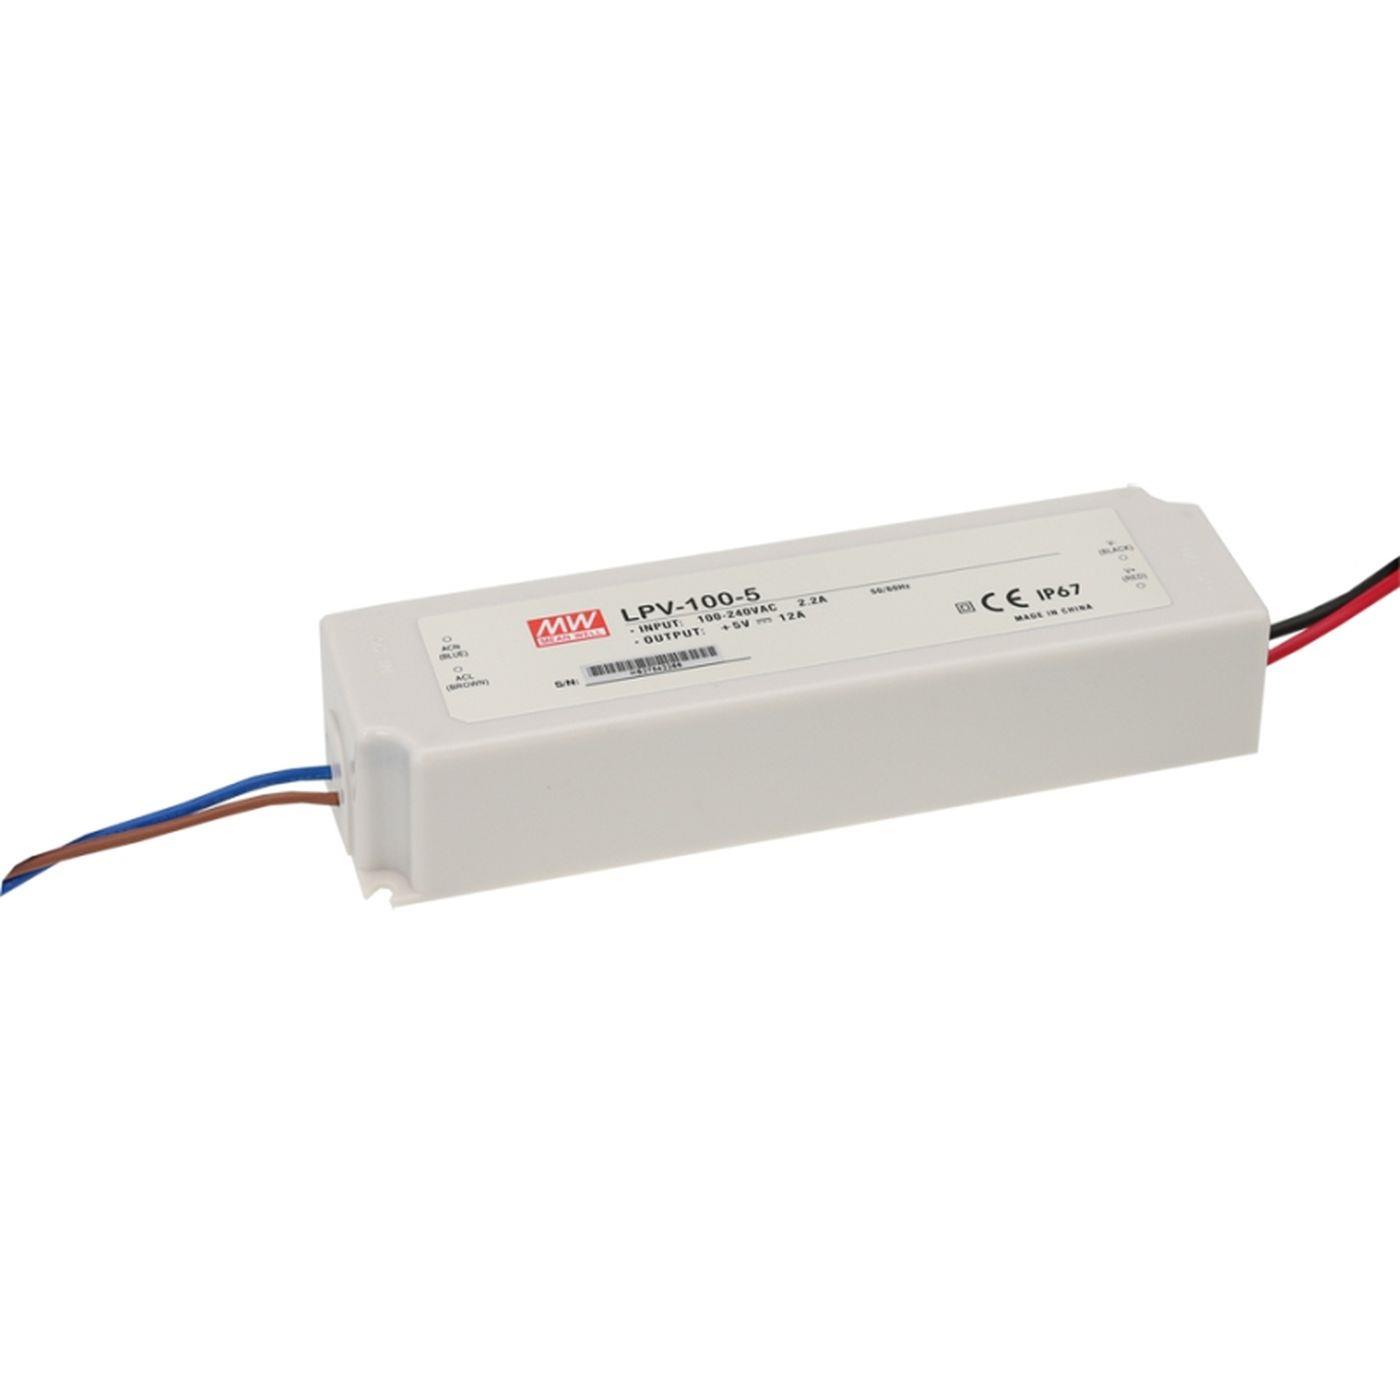 LPV-100-36 100W 36V 2,8A LED power supply Transformer Driver IP67